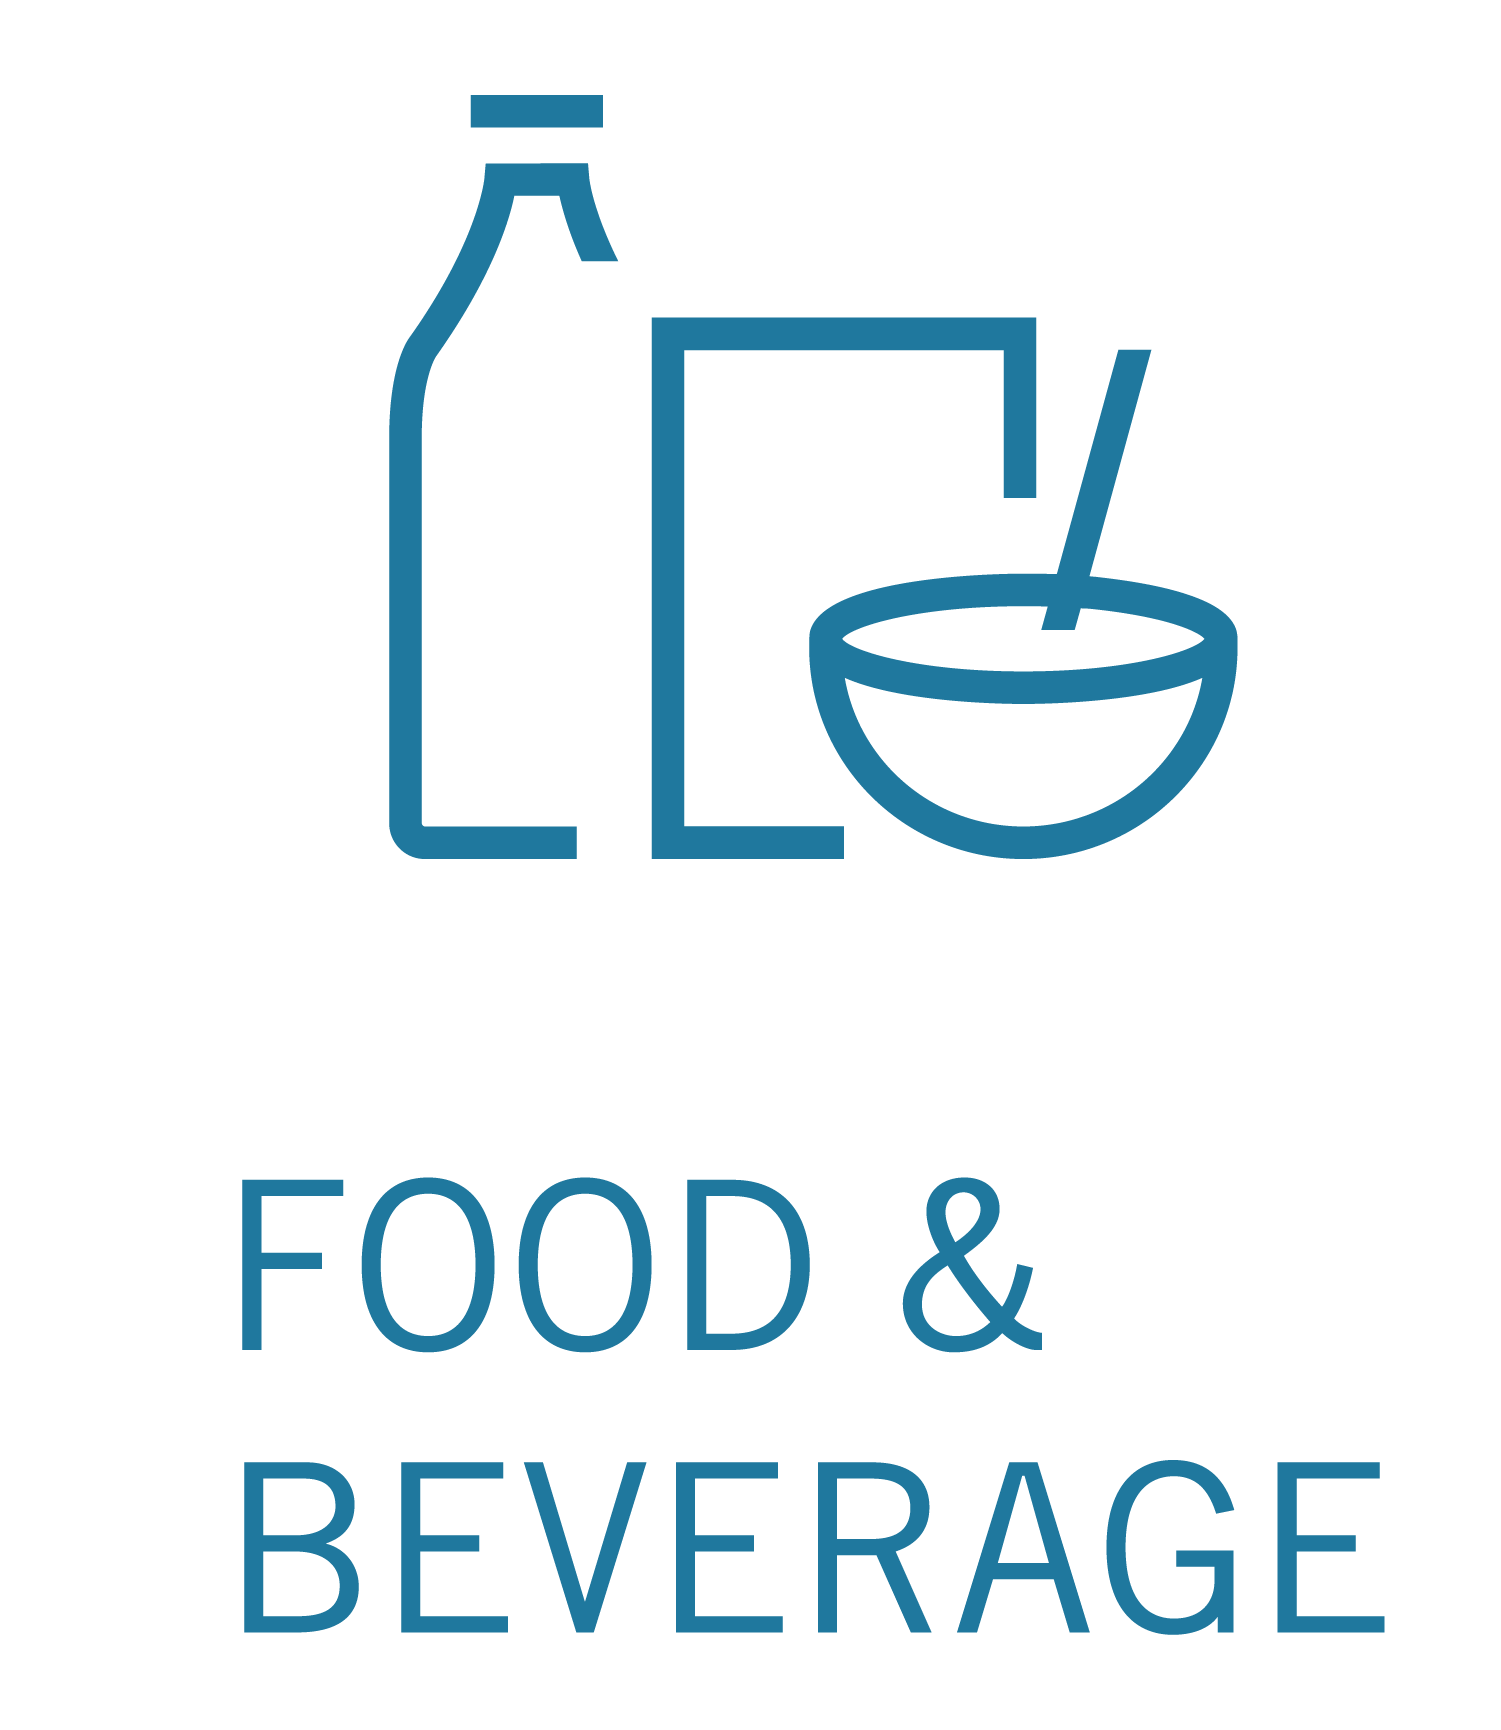 Food and Beverage Logo - Used Food & Beverage Equipment & Machinery